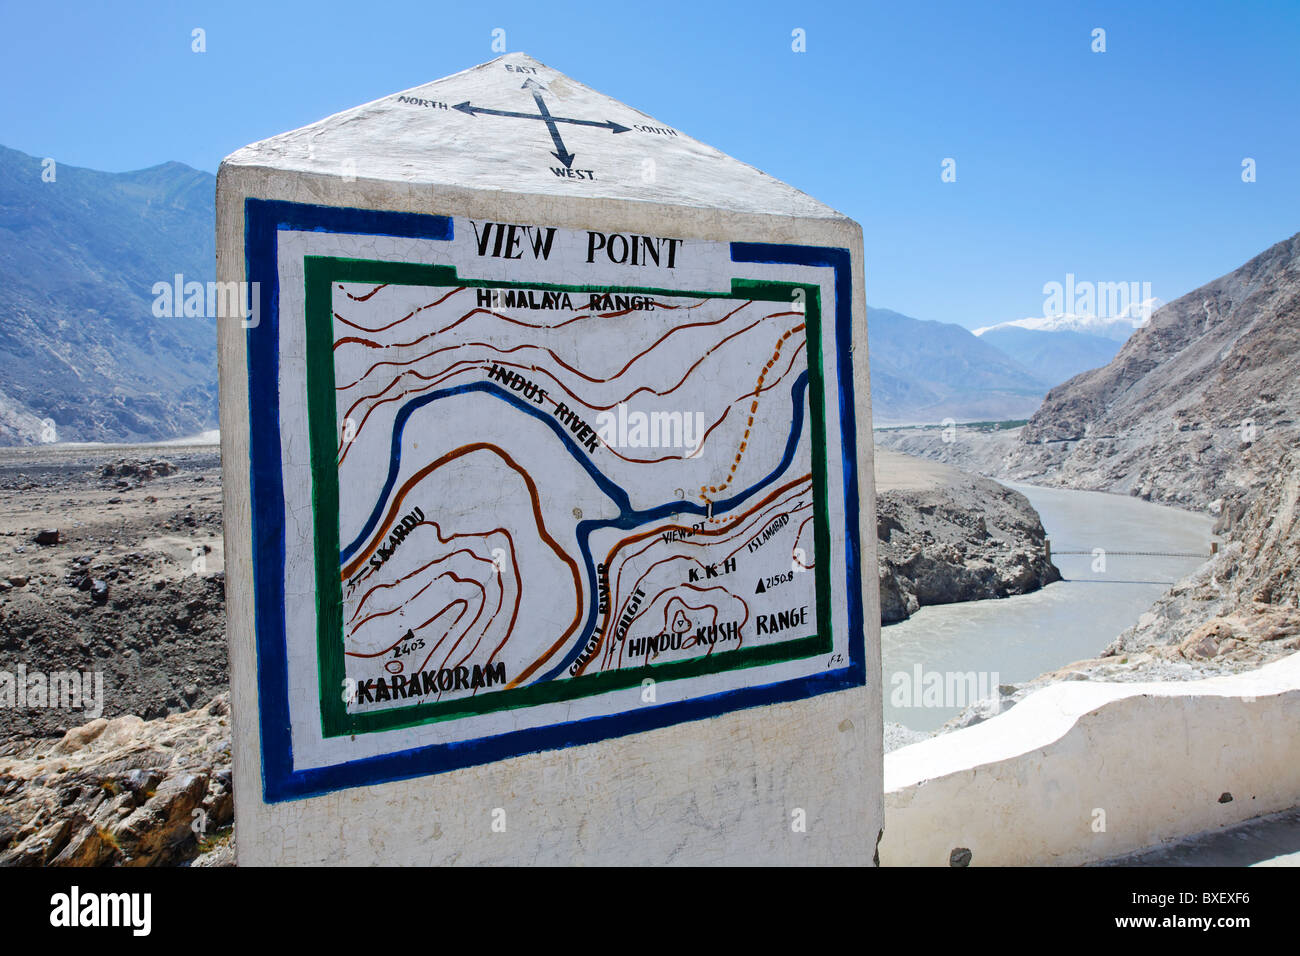 Pakistan - Gilgit-Baltistan - punto di giunzione delle tre grandi catene  montuose - Karakorum, Himalaya e Hindu Kush Foto stock - Alamy